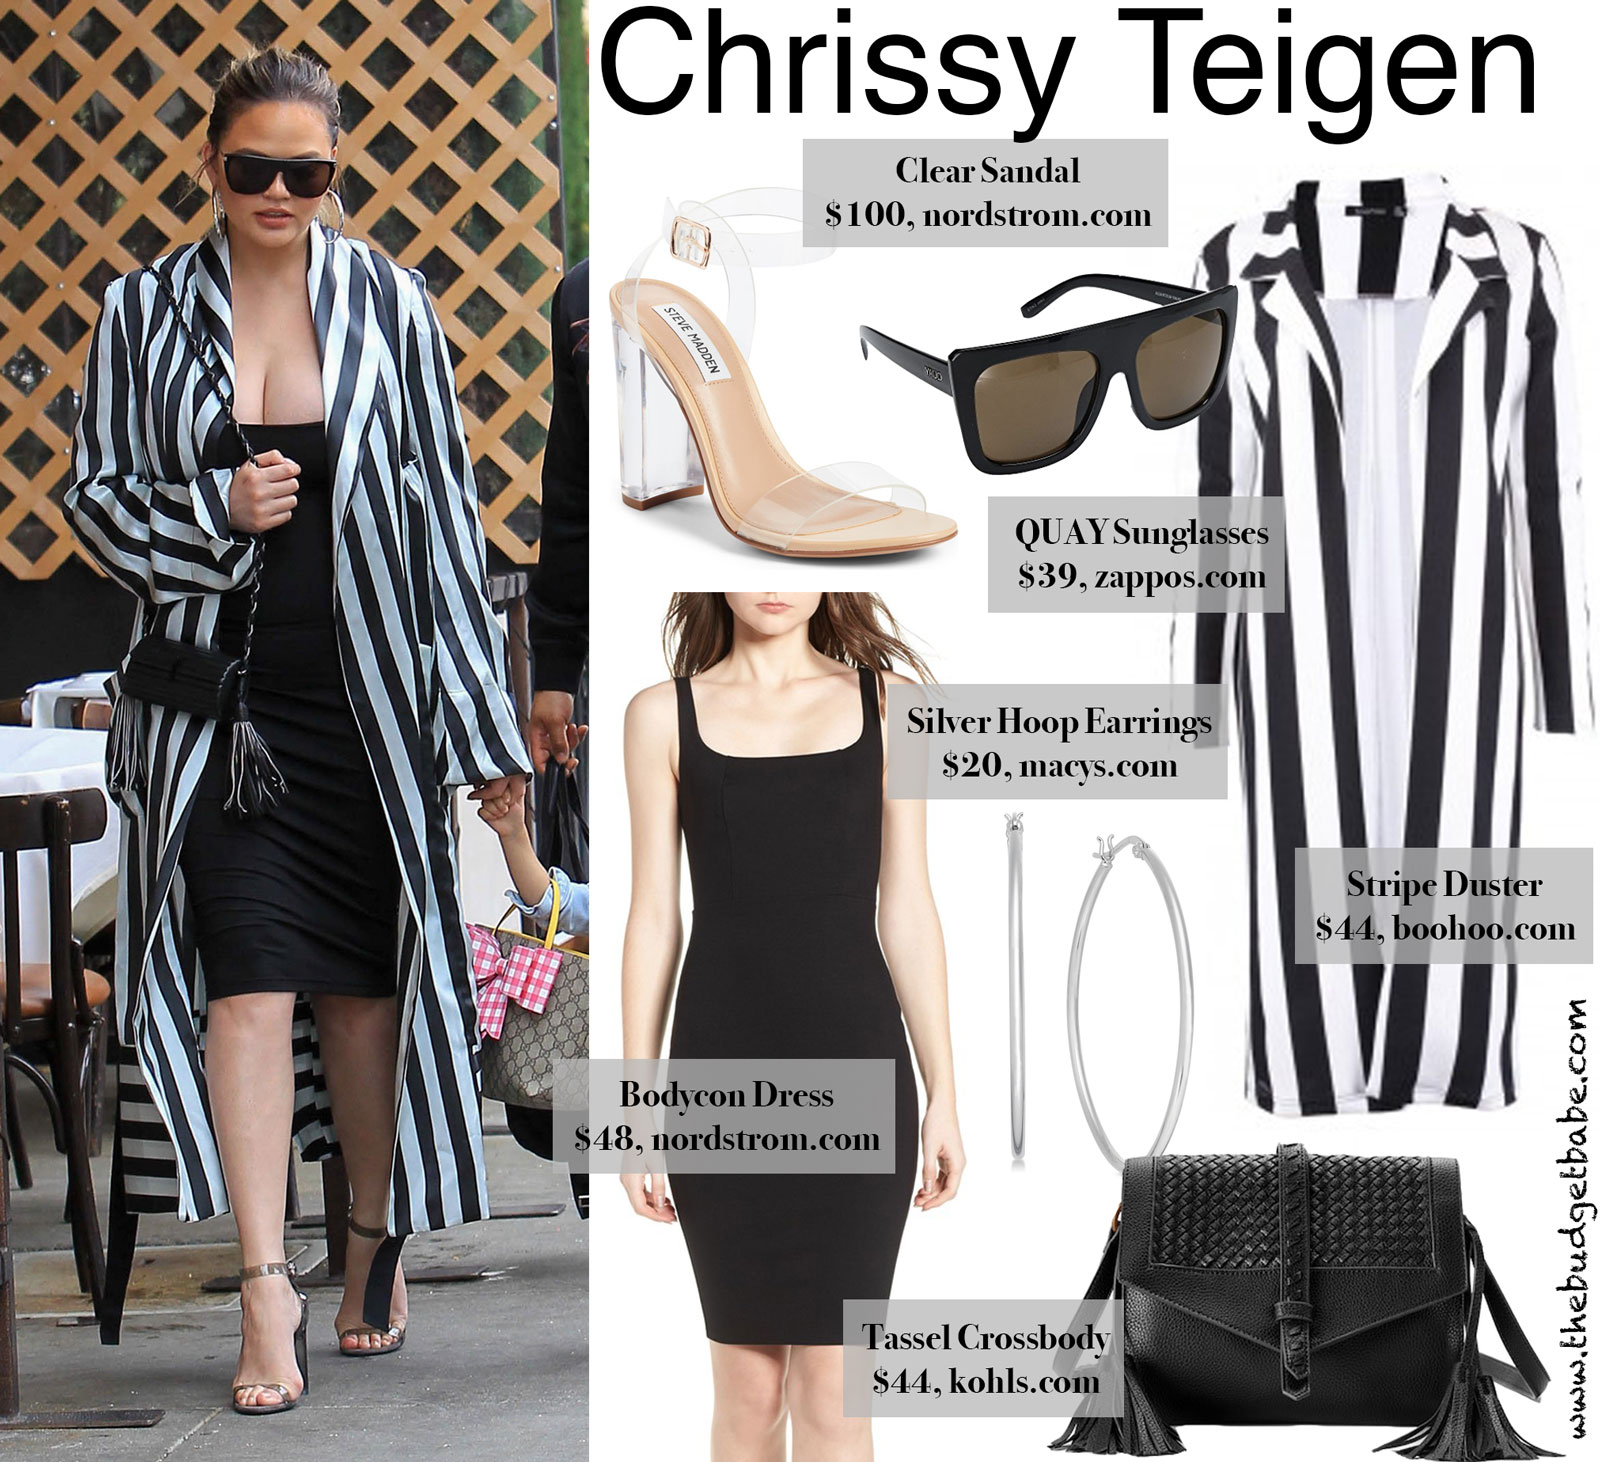 Chrissy Teigen Stripe Duster Look for Less